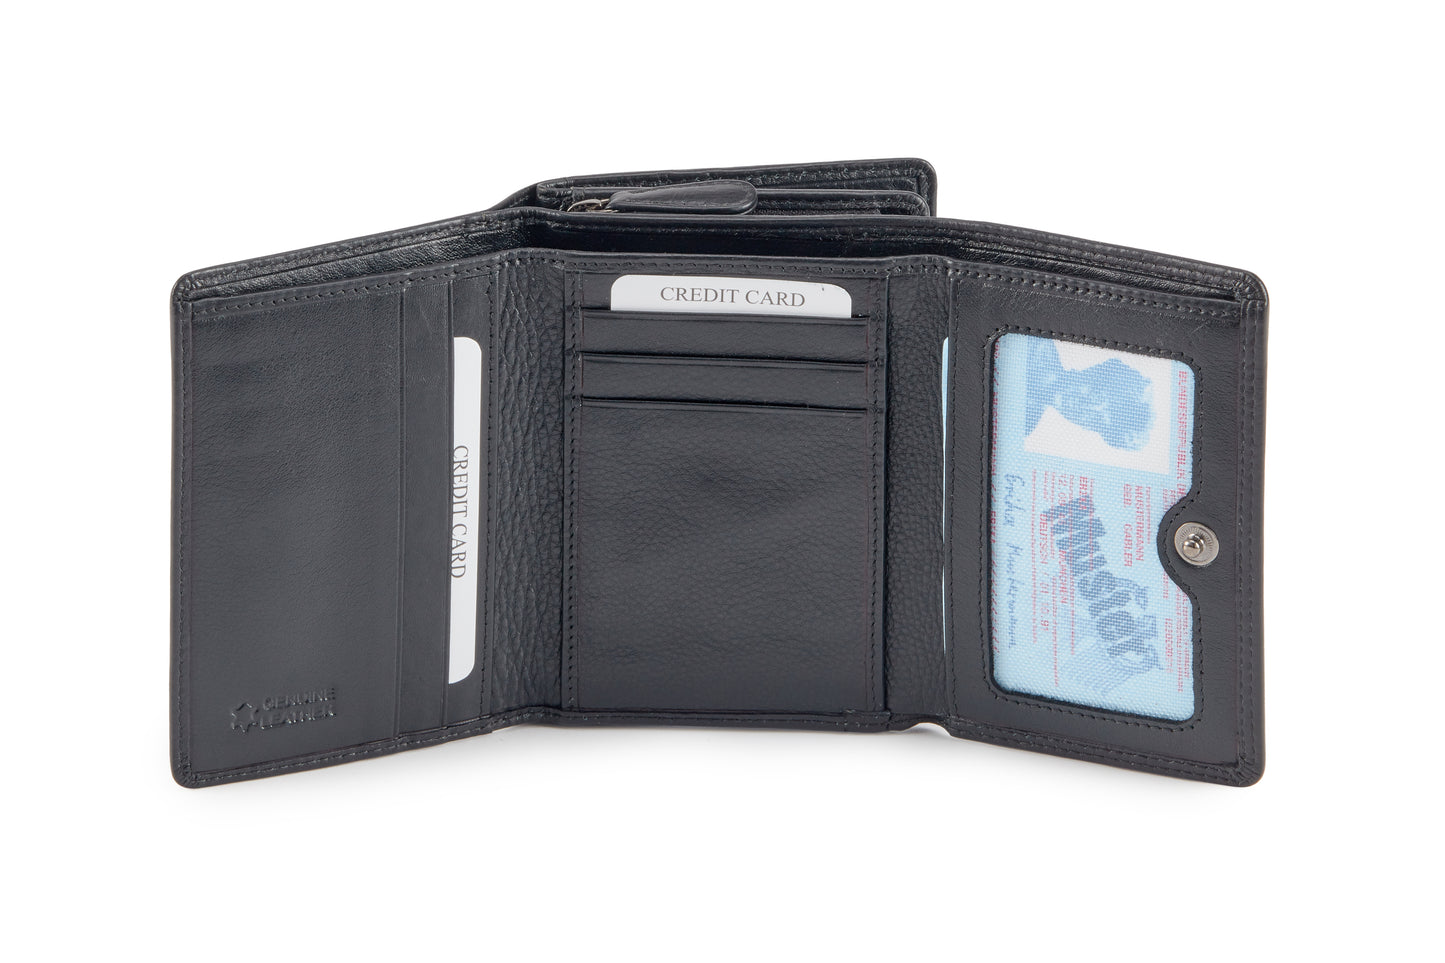 Calfnero Genuine Leather Women's Wallet (L-02-Black)